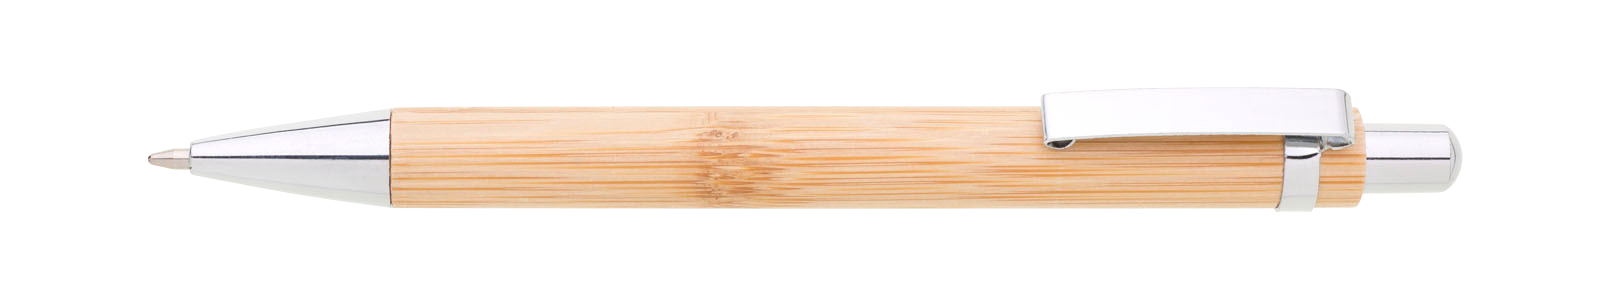 Propiska kov/bambus TURAL